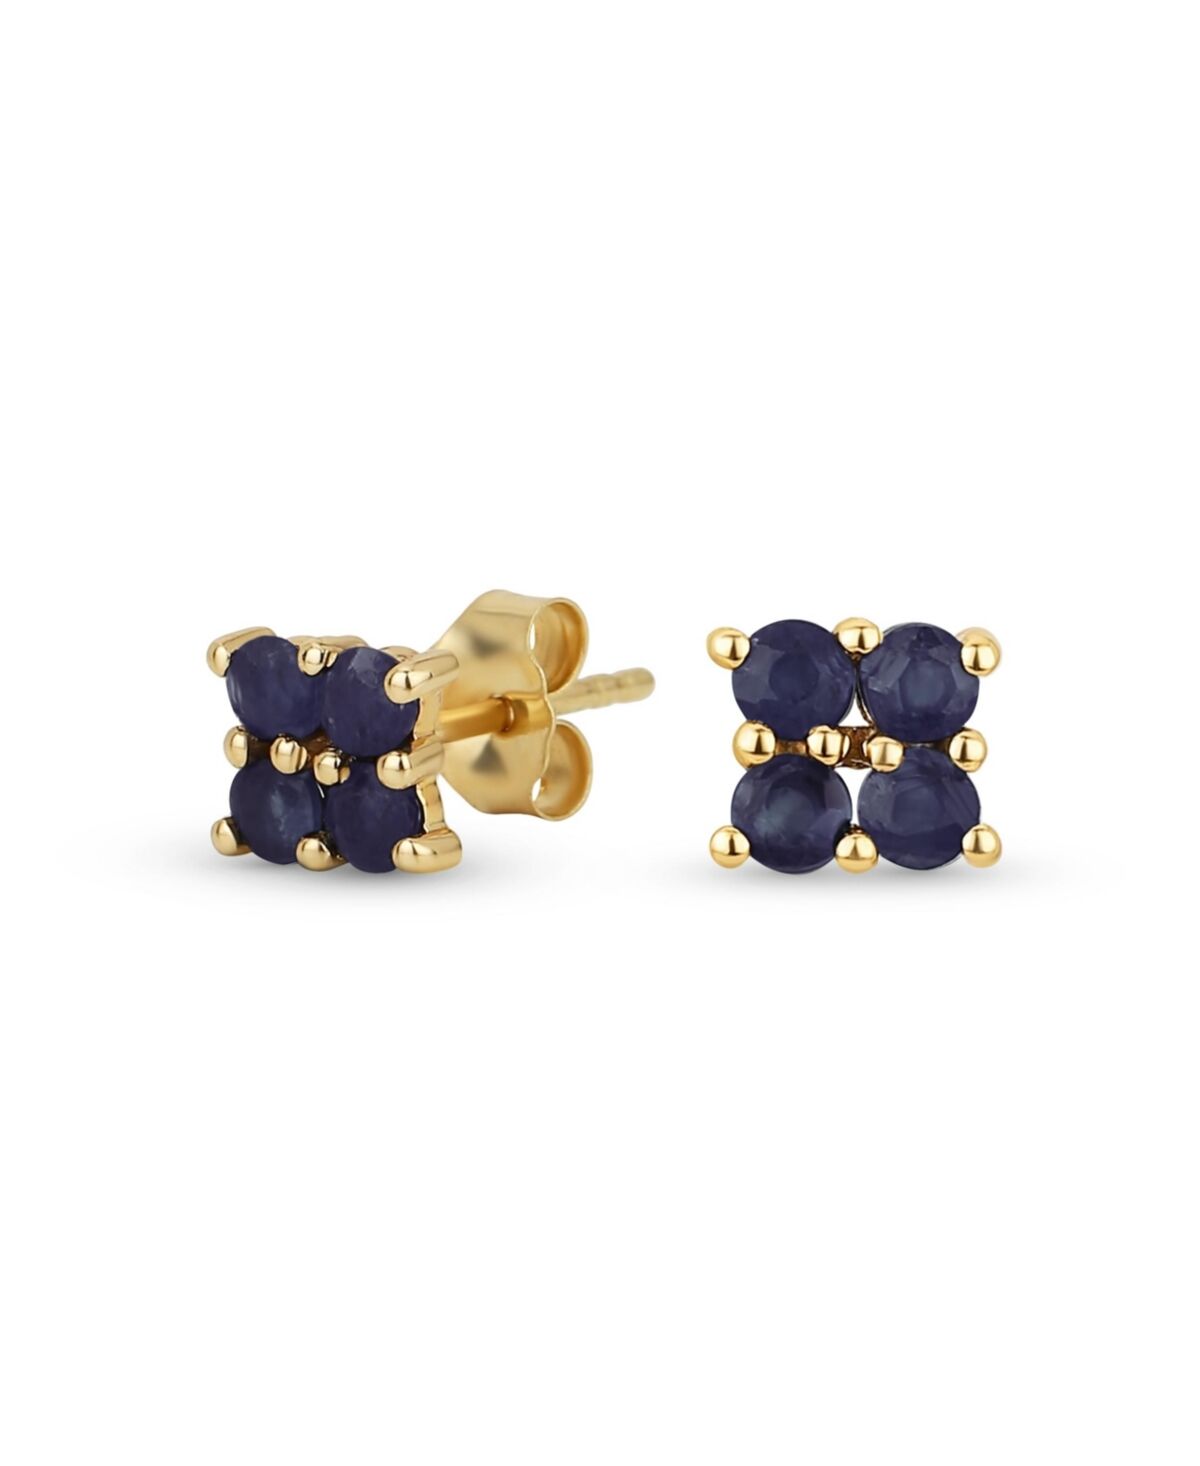 Bling Jewelry Minimalist Geometric Genuine 14K Yellow Gold Square Gemstone Stud Earrings for Women Teens - Blue